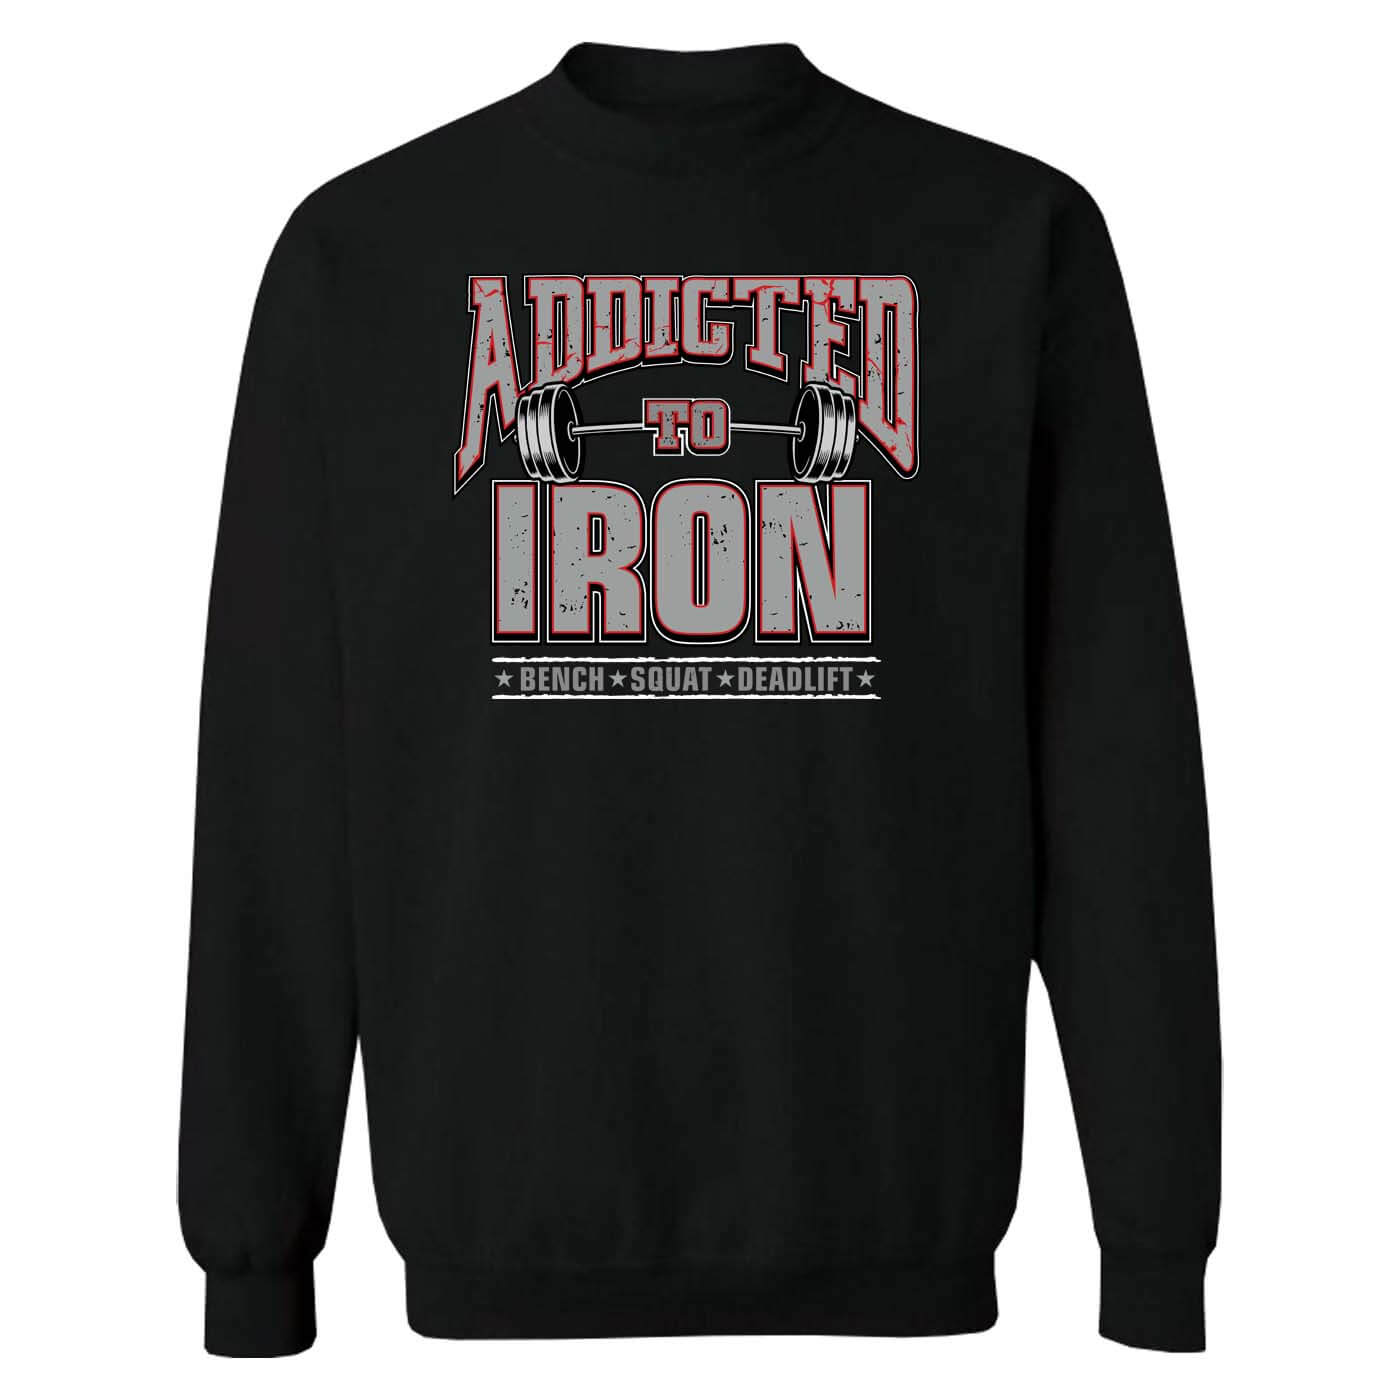 Addicted To Iron